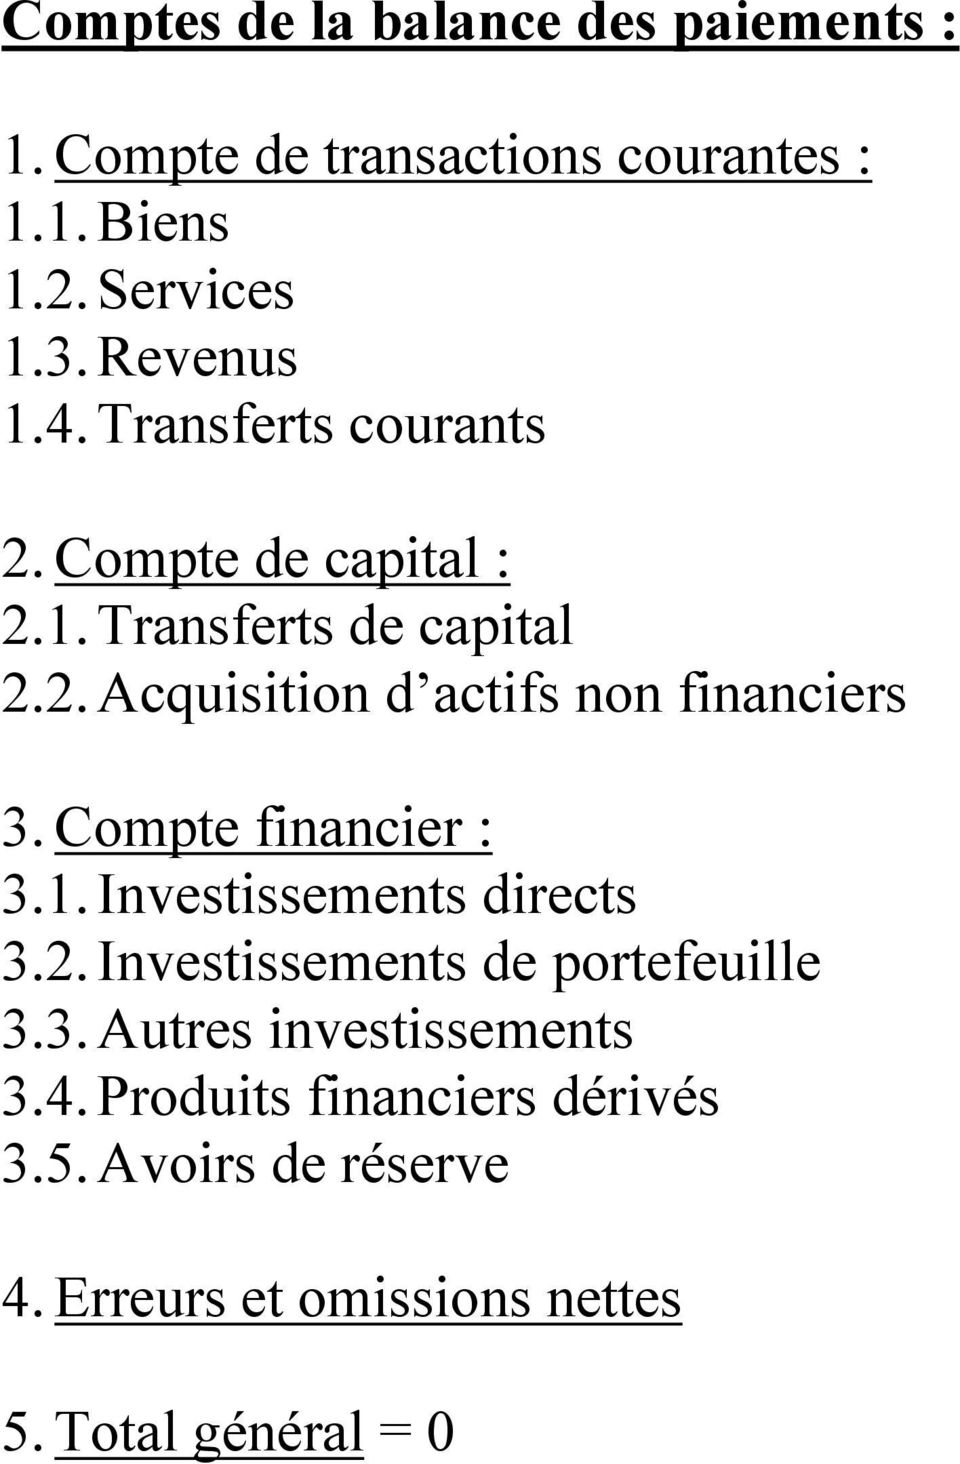 Compte financier : 3.1. Investissements directs 3.2. Investissements de portefeuille 3.3. Autres investissements 3.